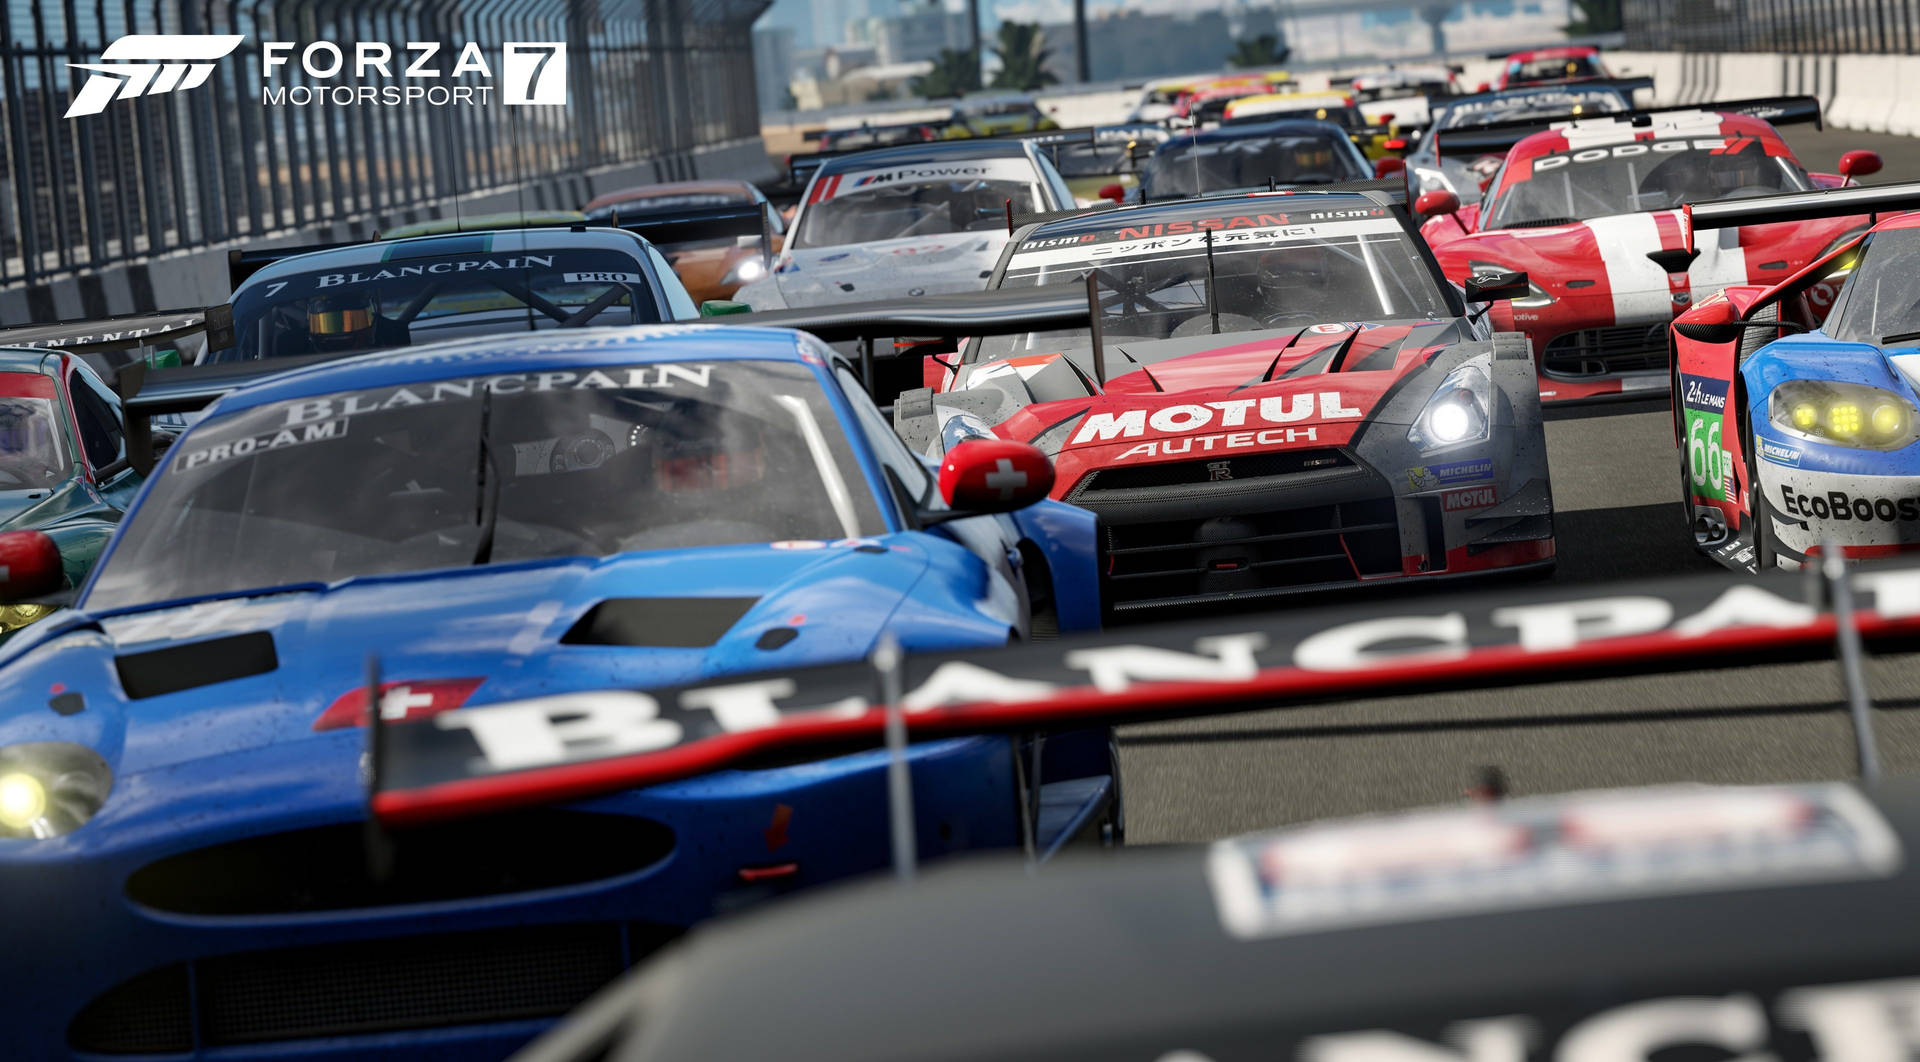 Forza Motorsport 7 Racing Cars Wallpaper